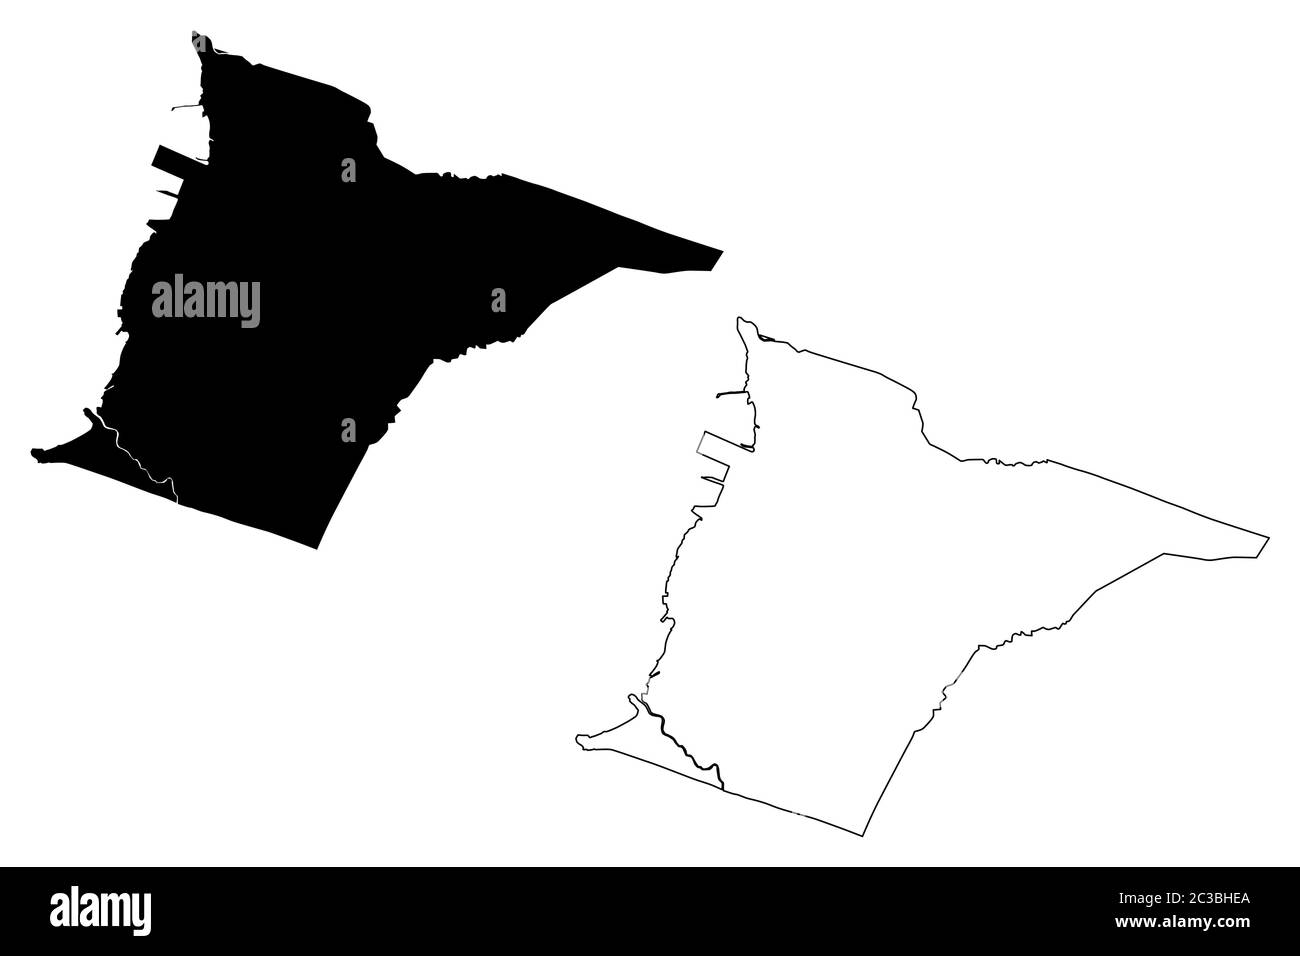 Bacolod City (Republik der Philippinen, Western Visayas Region) Karte Vektor Illustration, scribble Skizze Stadt Bacolod Karte Stock Vektor